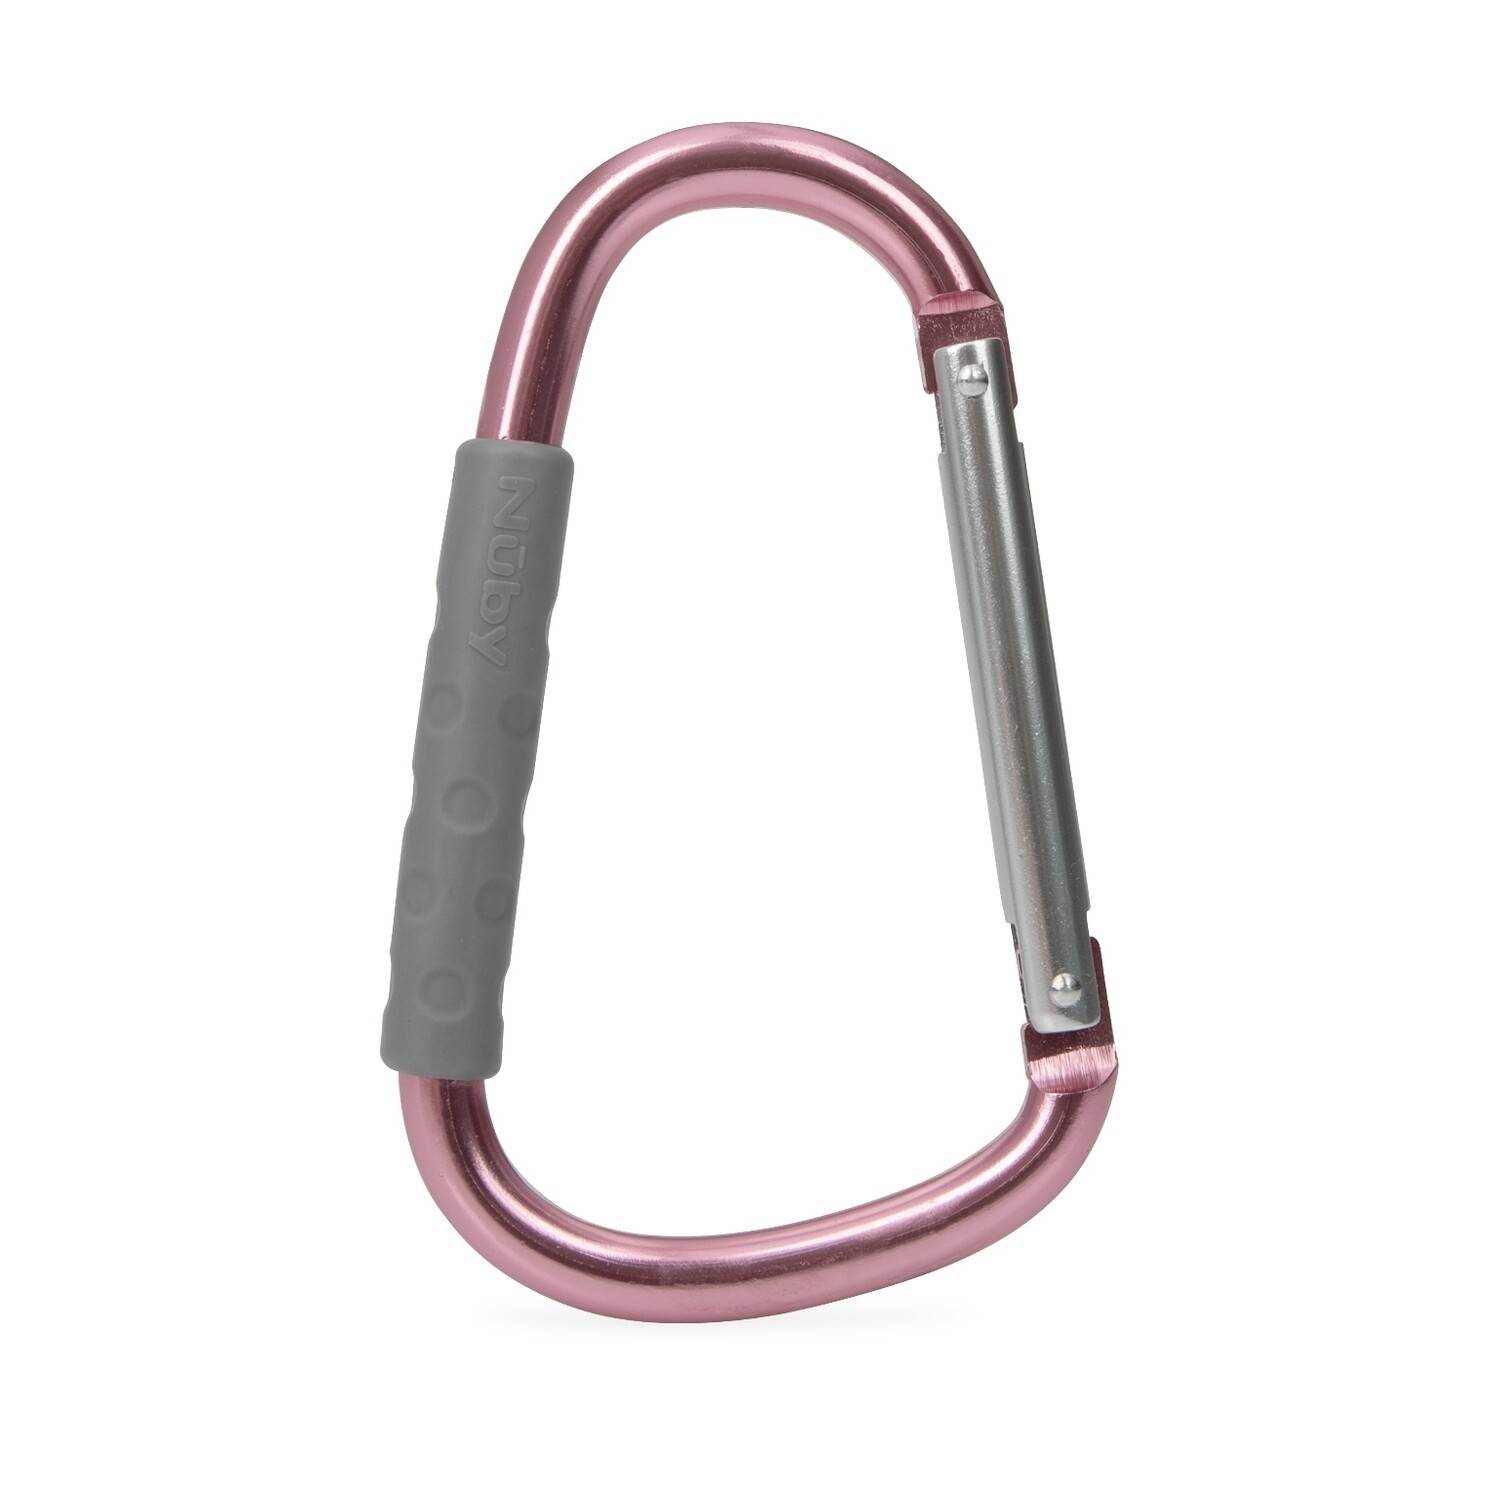 . Case of [48] Nuby Large Handy Hook Stroller Clips - Textured Soft Grip .